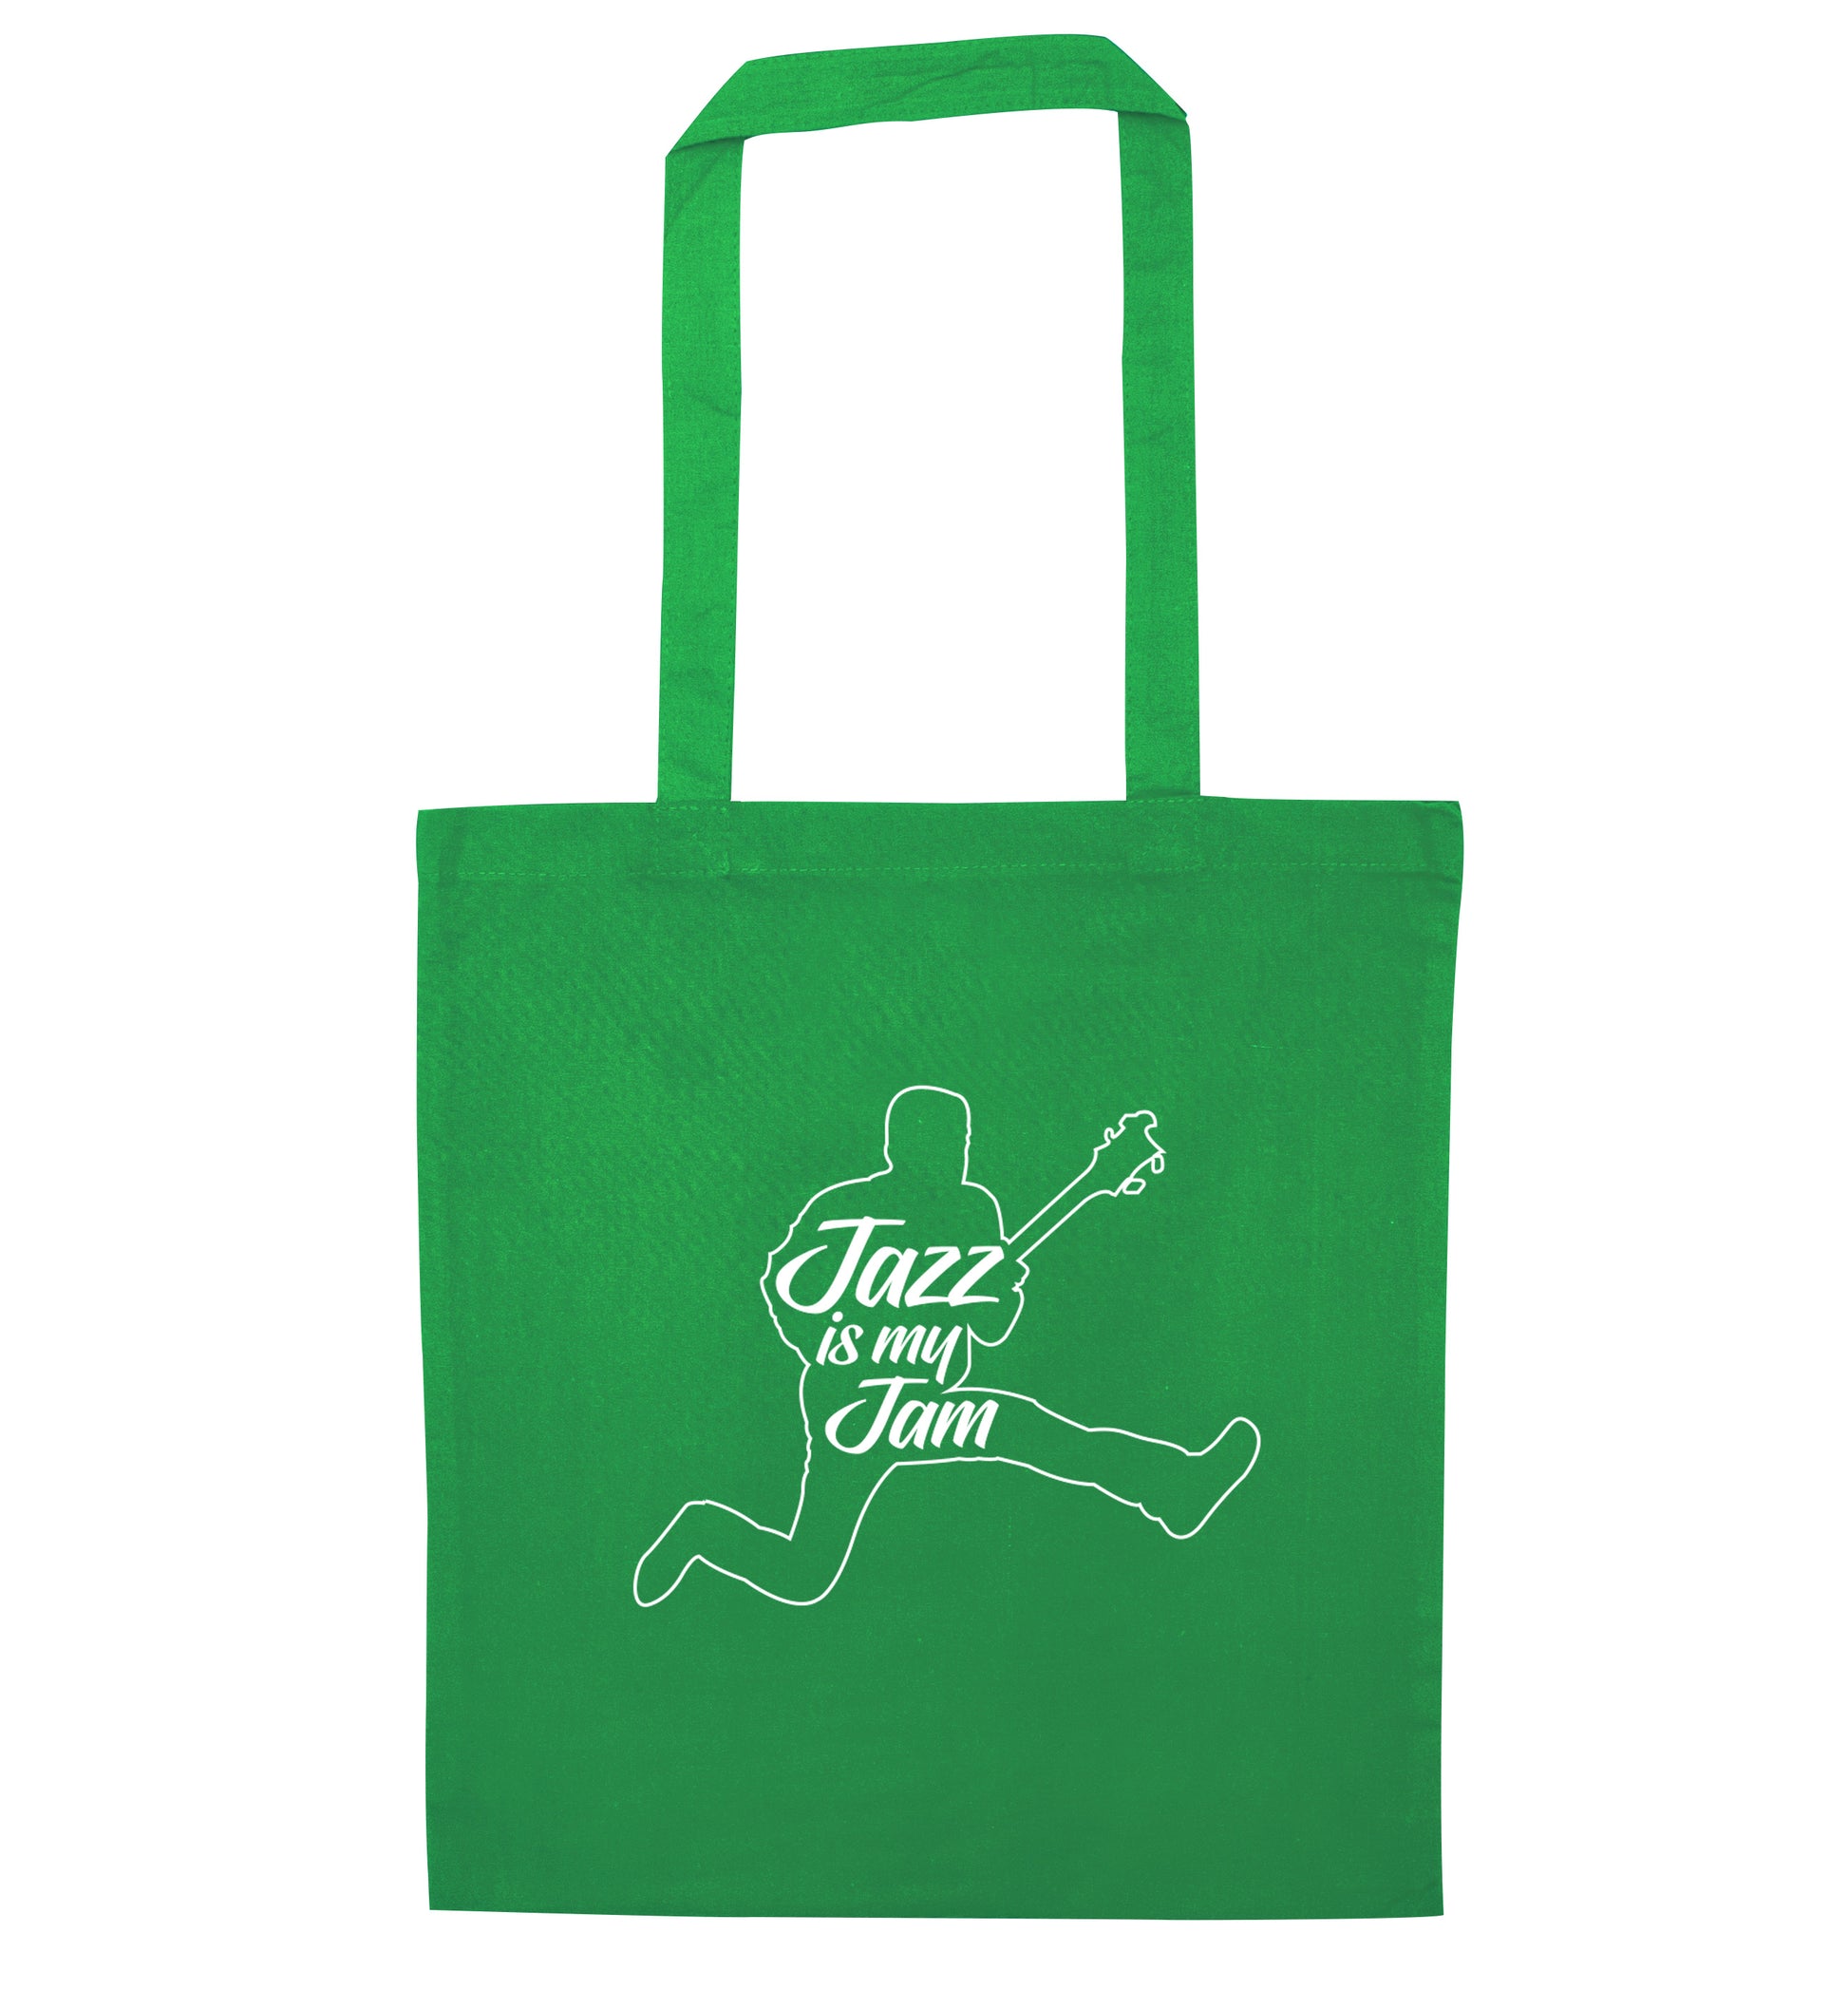 Jazz is my jam green tote bag